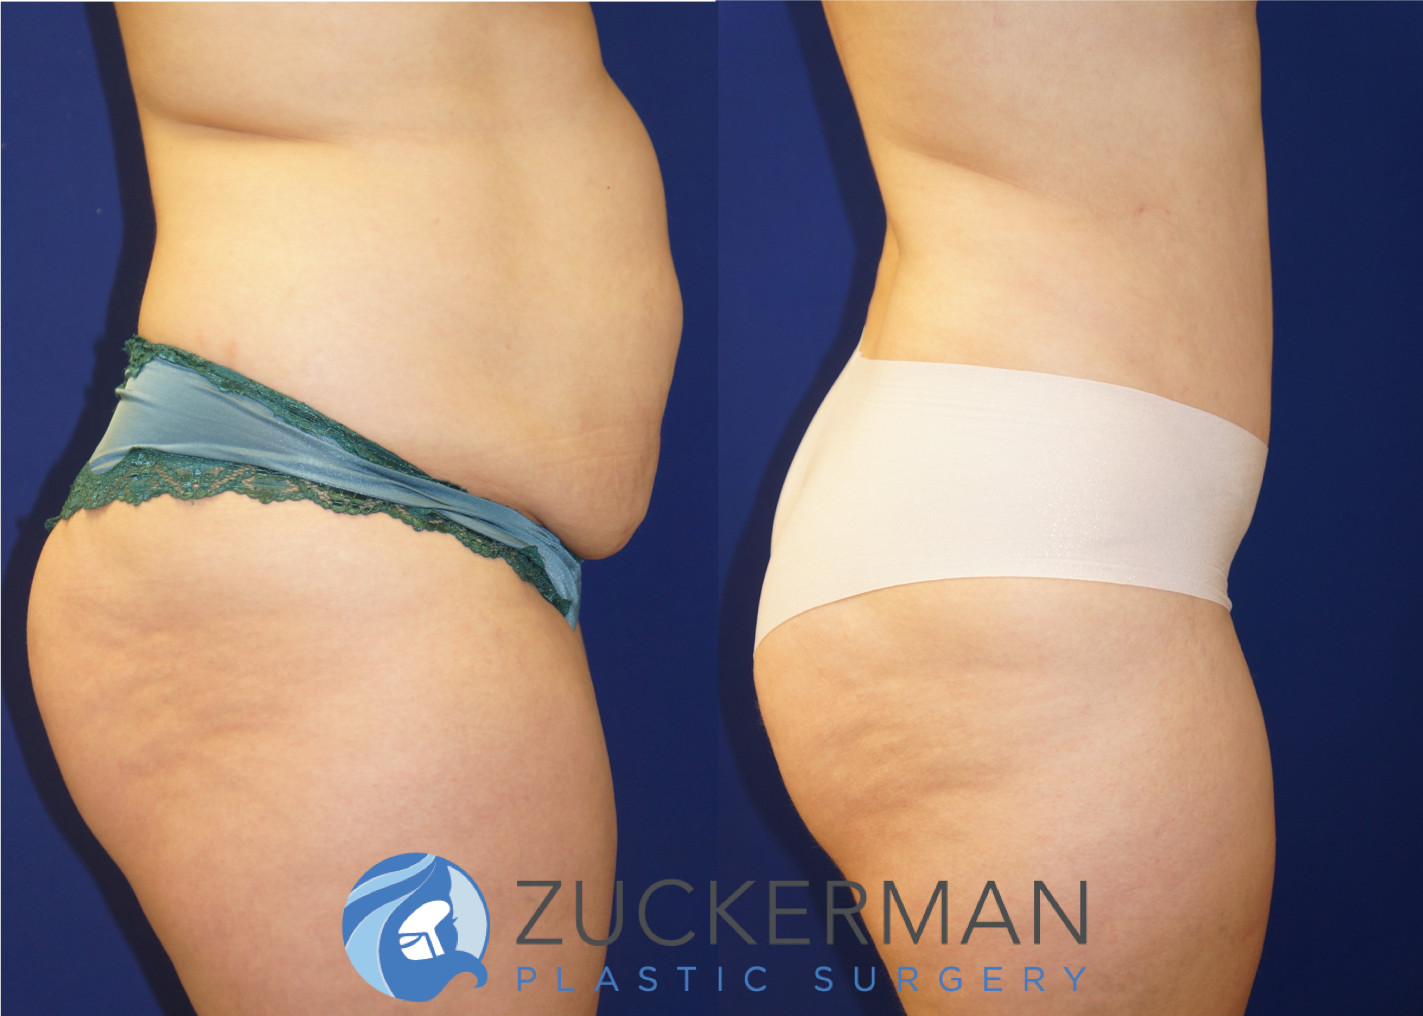 tummy tuck, abdominoplasty, 9, before and after, joshua zuckerman, right profile